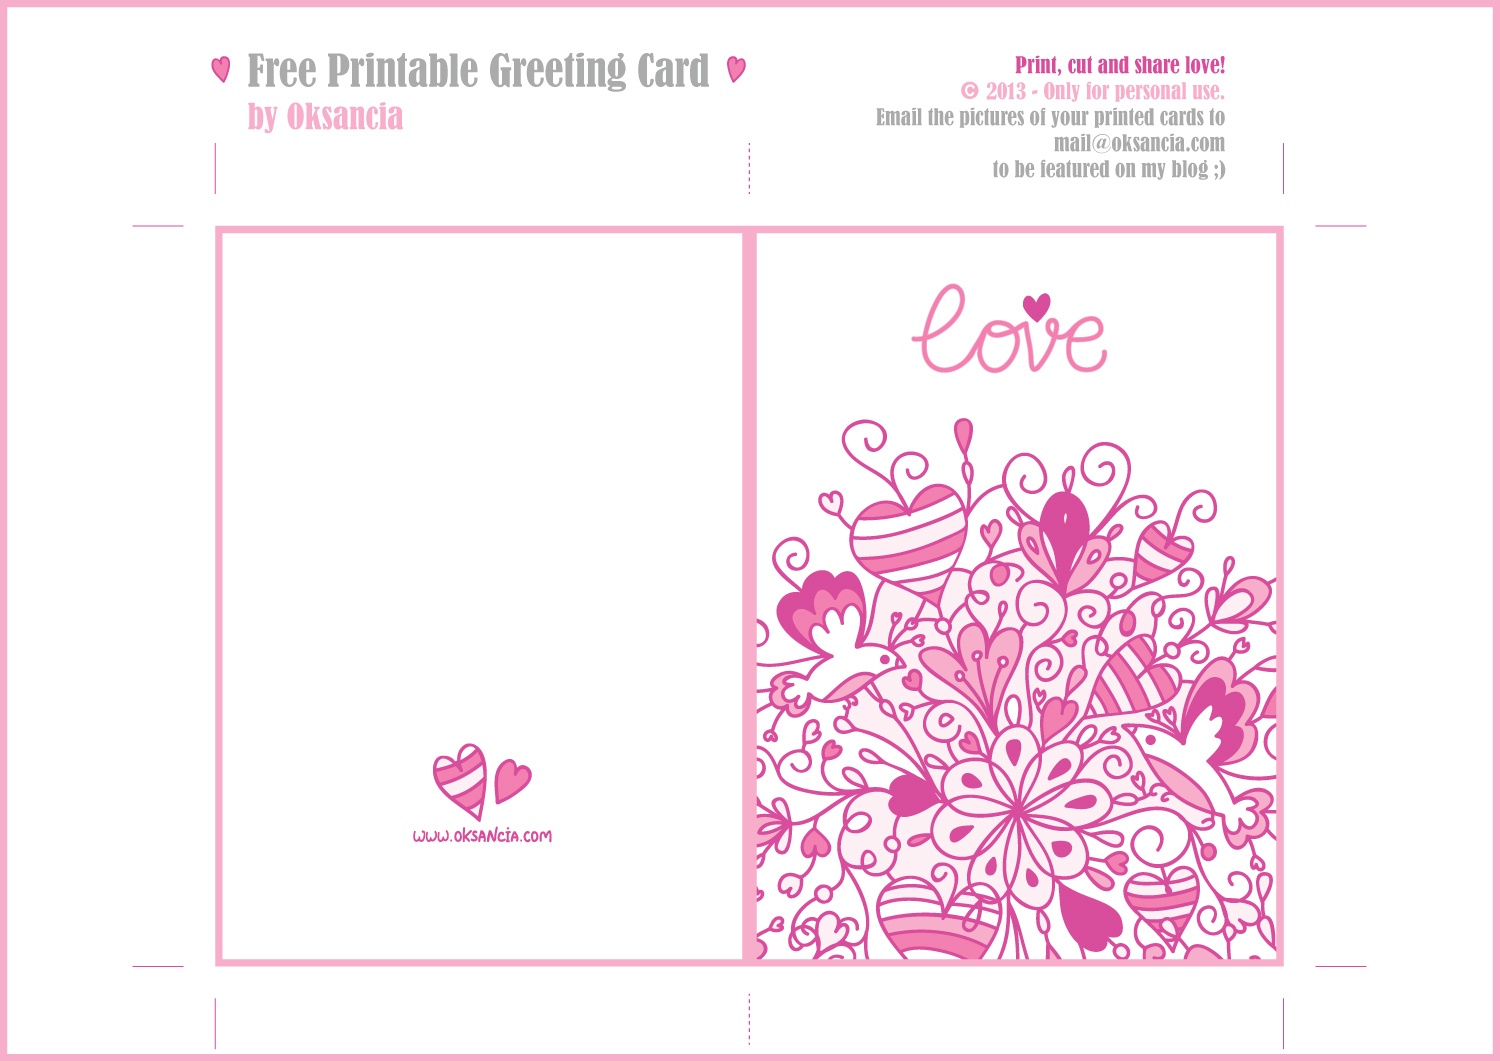 Printable Greeting Card | Xmasblor - Free Printable Love Greeting Cards